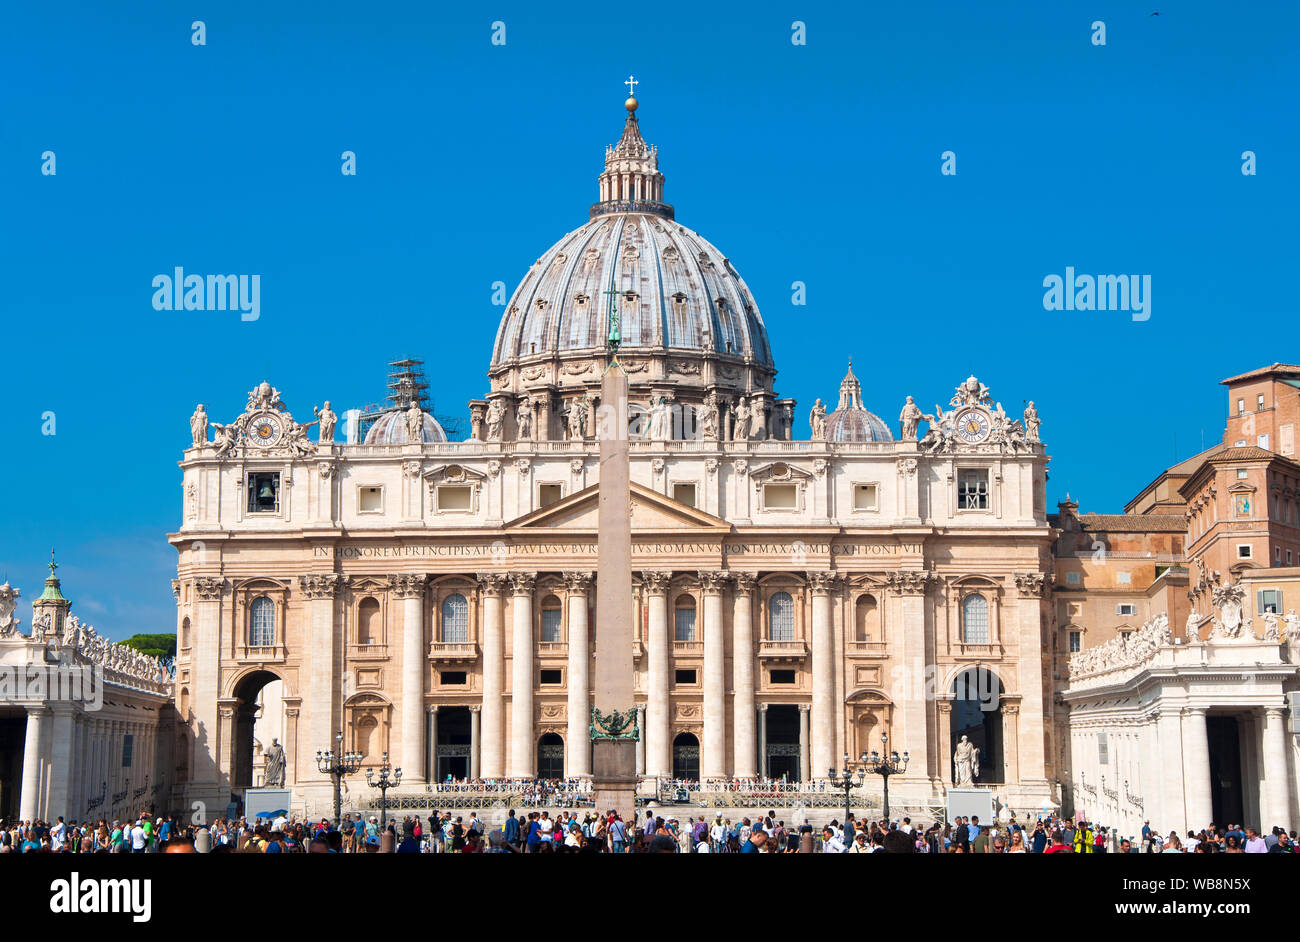 St. Peter's Basilica, Rome, Italy Stock Photo